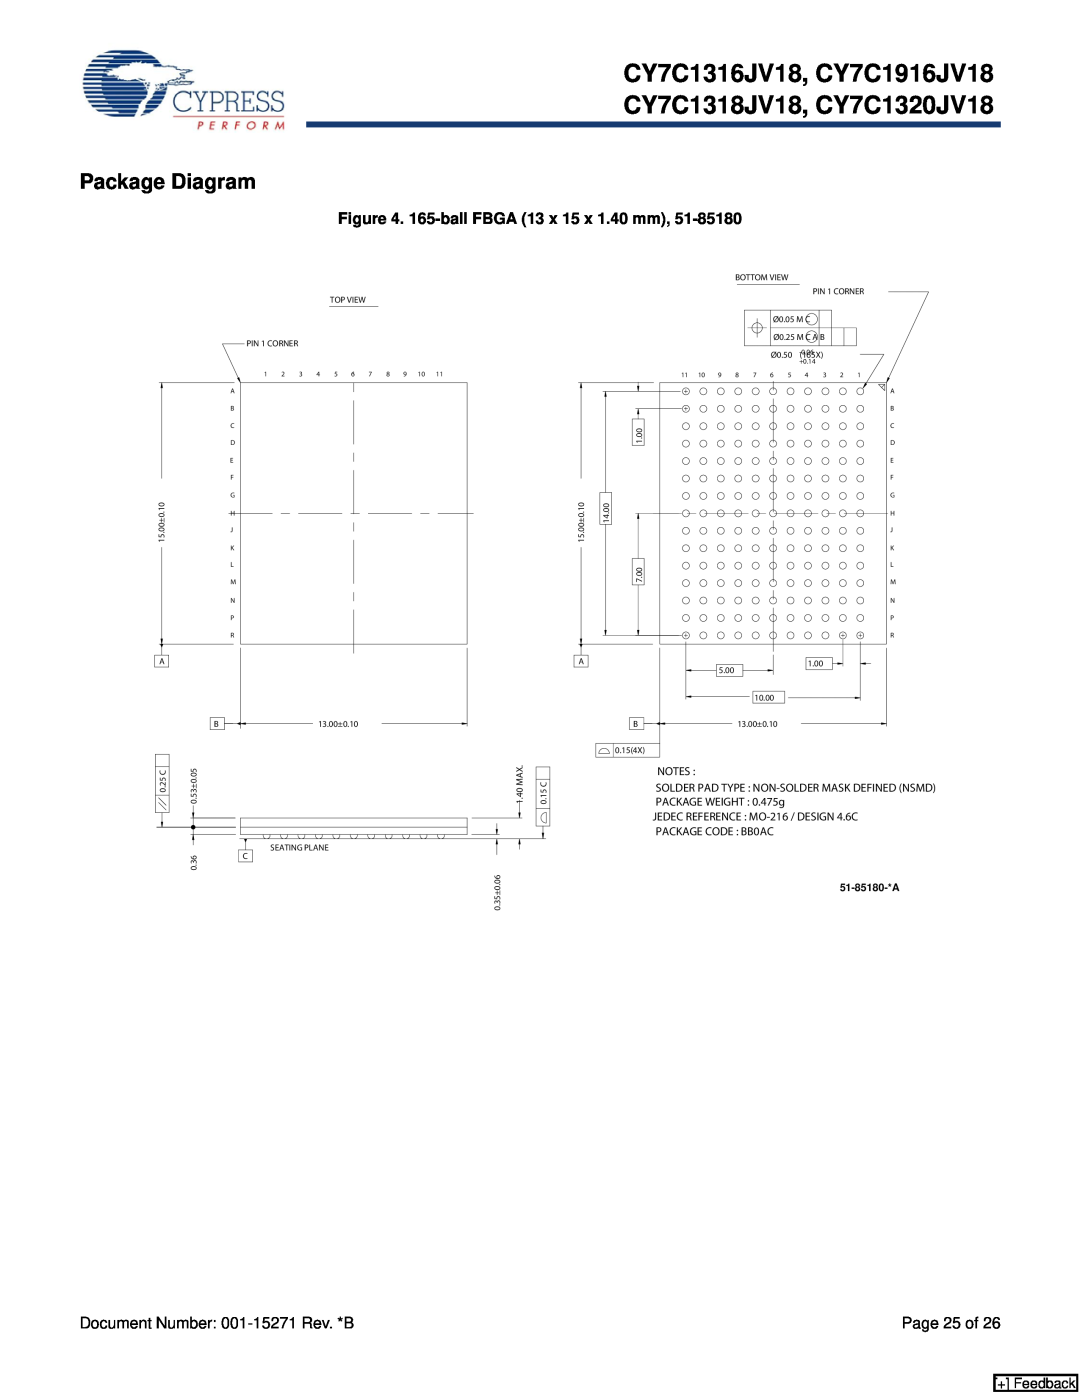 Cypress manual Package Diagram, CY7C1316JV18, CY7C1916JV18 CY7C1318JV18, CY7C1320JV18, 165-ball FBGA 13 x 15 x 1.40 mm 